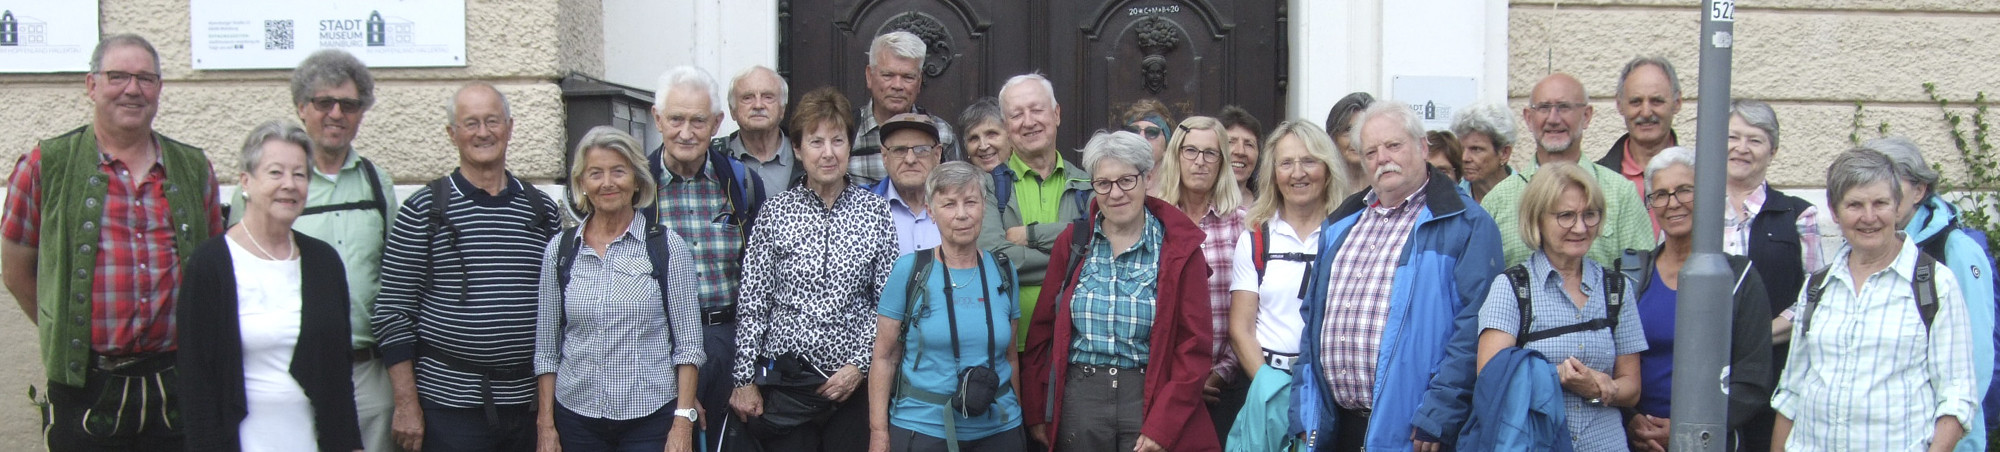 Seniorengruppe DAV Regensburg besucht am 7. Juni das Stadtmuseum Mainburg.